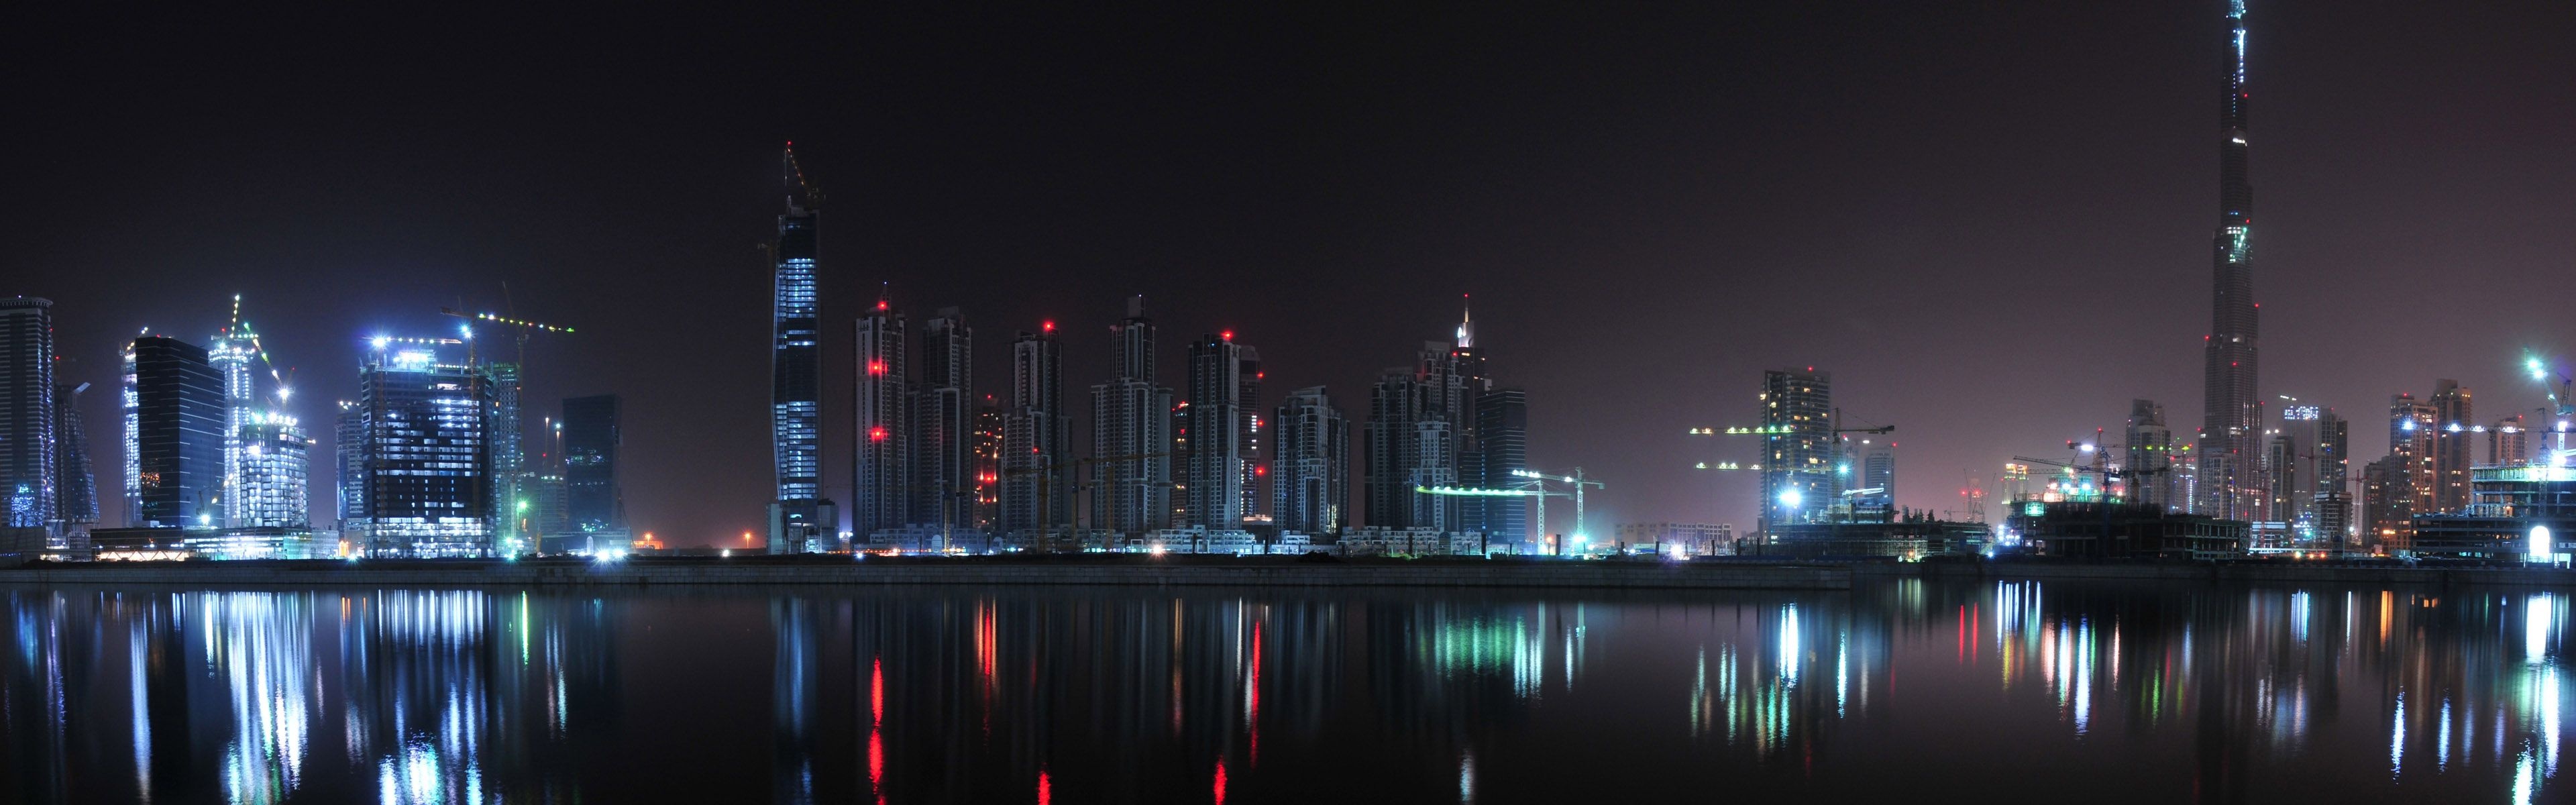 Dubai Skyline, Windows 8 dual wallpaper, City landscape photography, Dual screen wallpaper, 3840x1200 Dual Screen Desktop